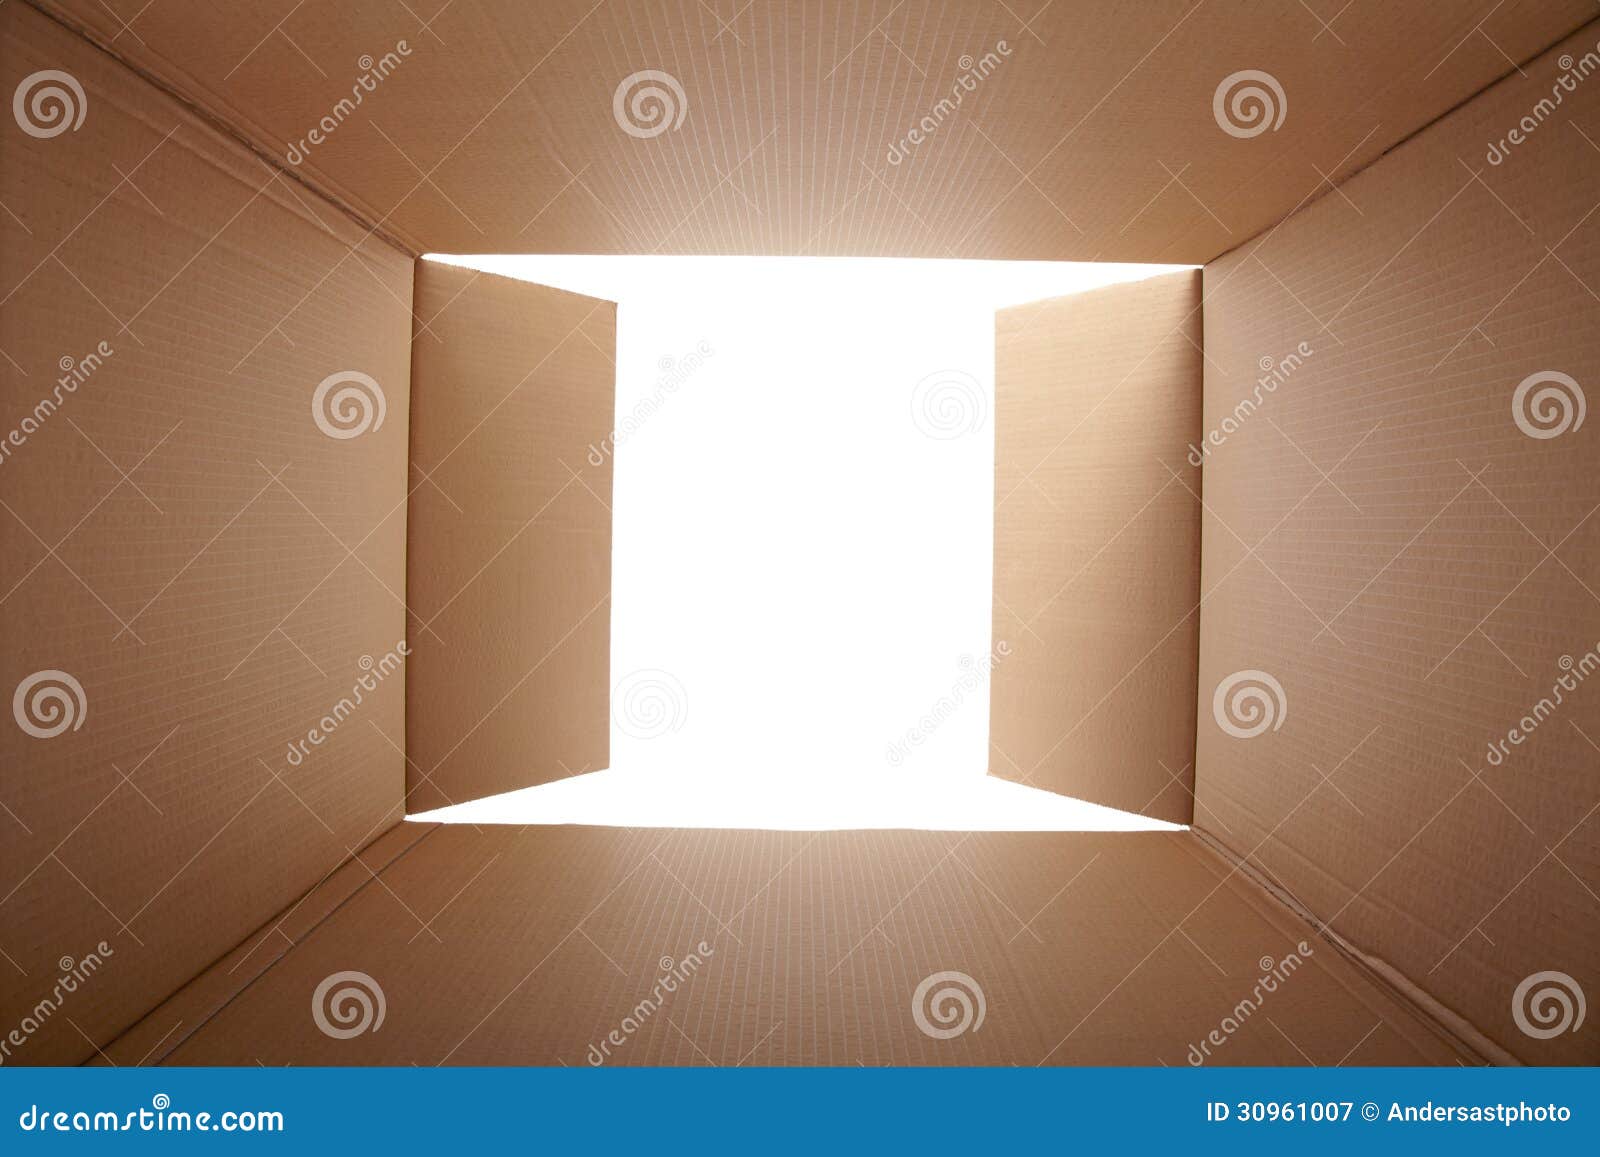 cardboard box, inside view